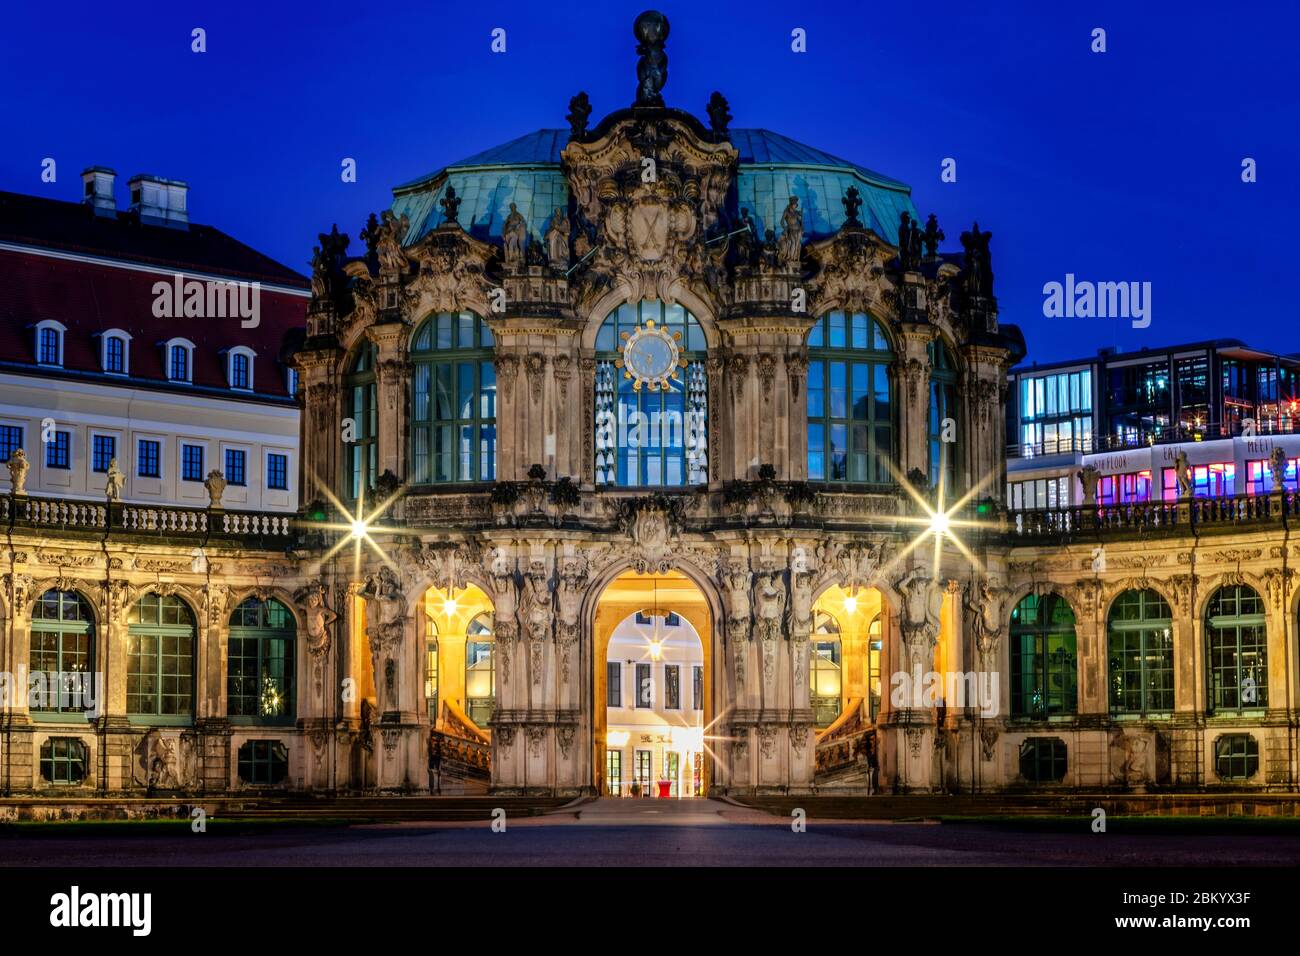 Dresda di notte | Dresda bei Nacht, Zwinger, architettura barocca Foto Stock